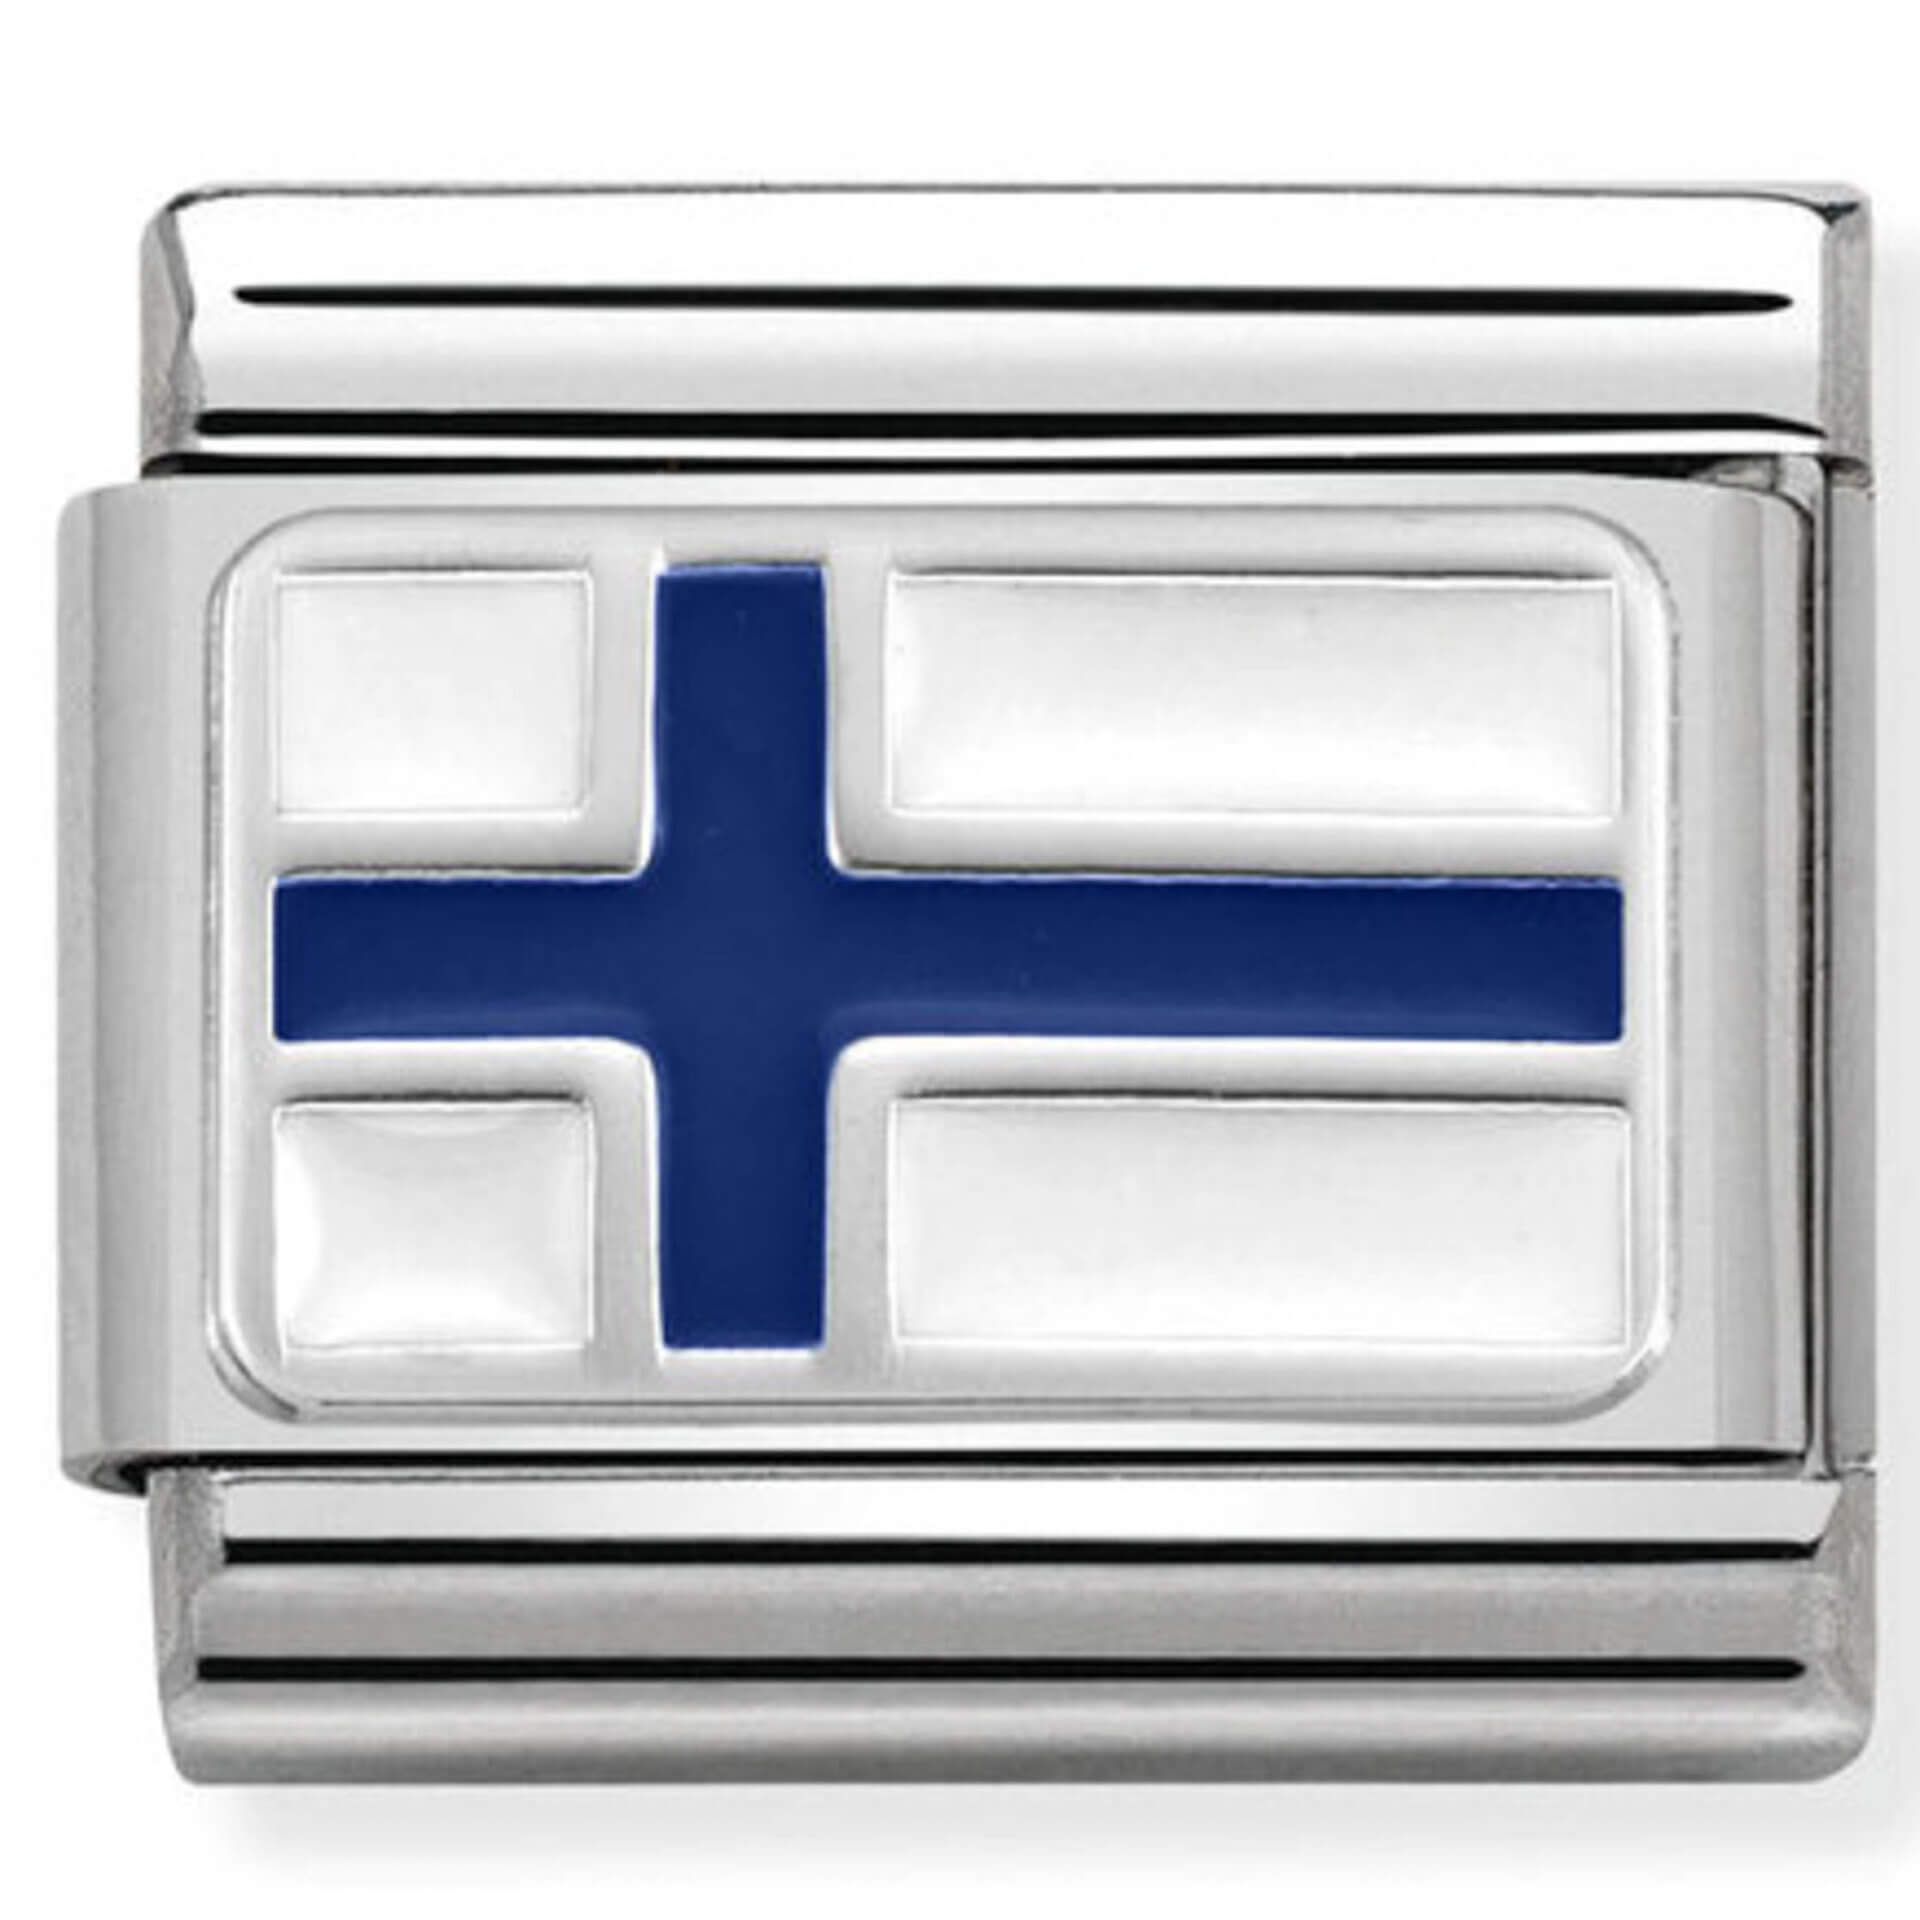 Nomination Silver Finland